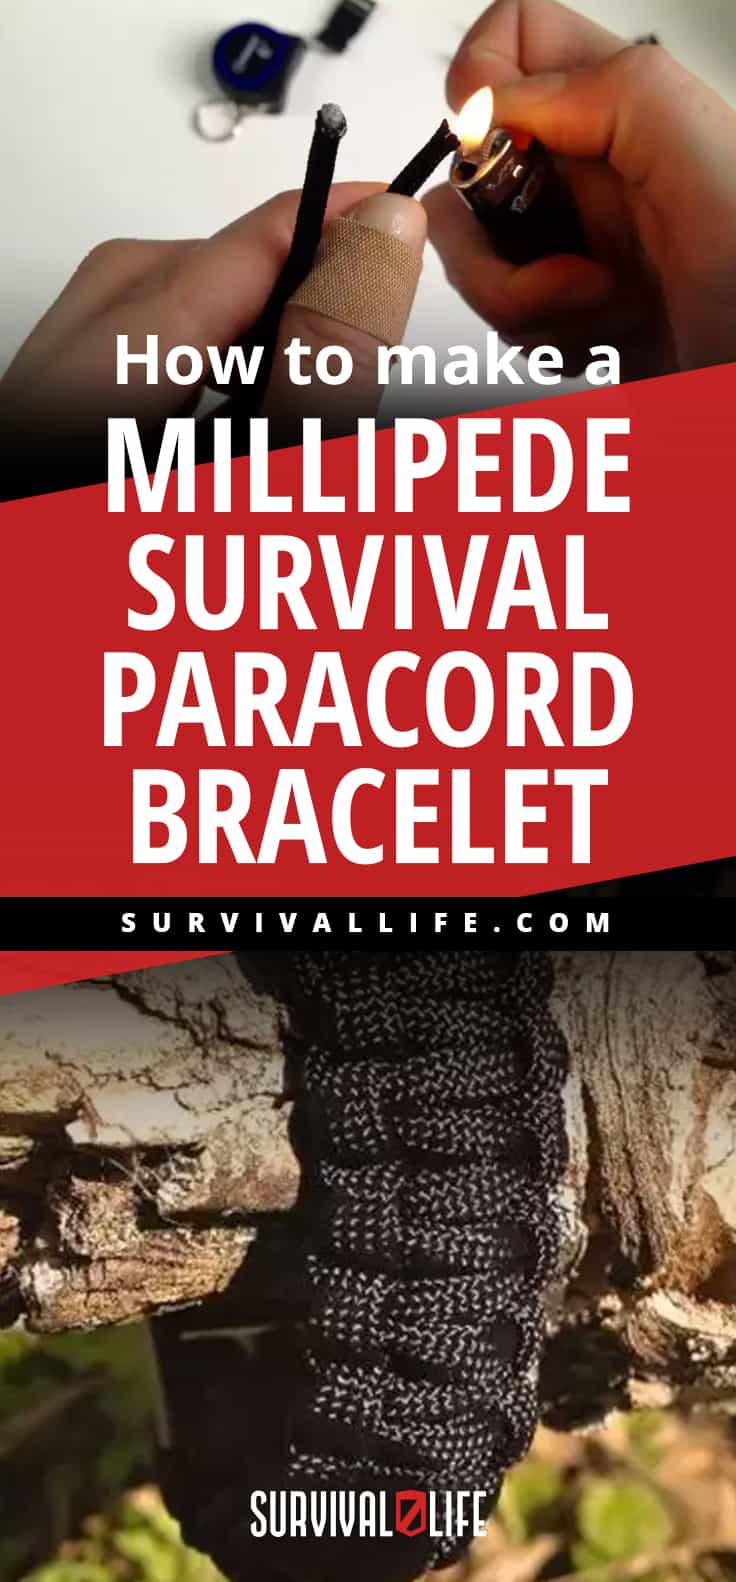 Placard | How to Make a Millipede Survival Paracord Bracelet